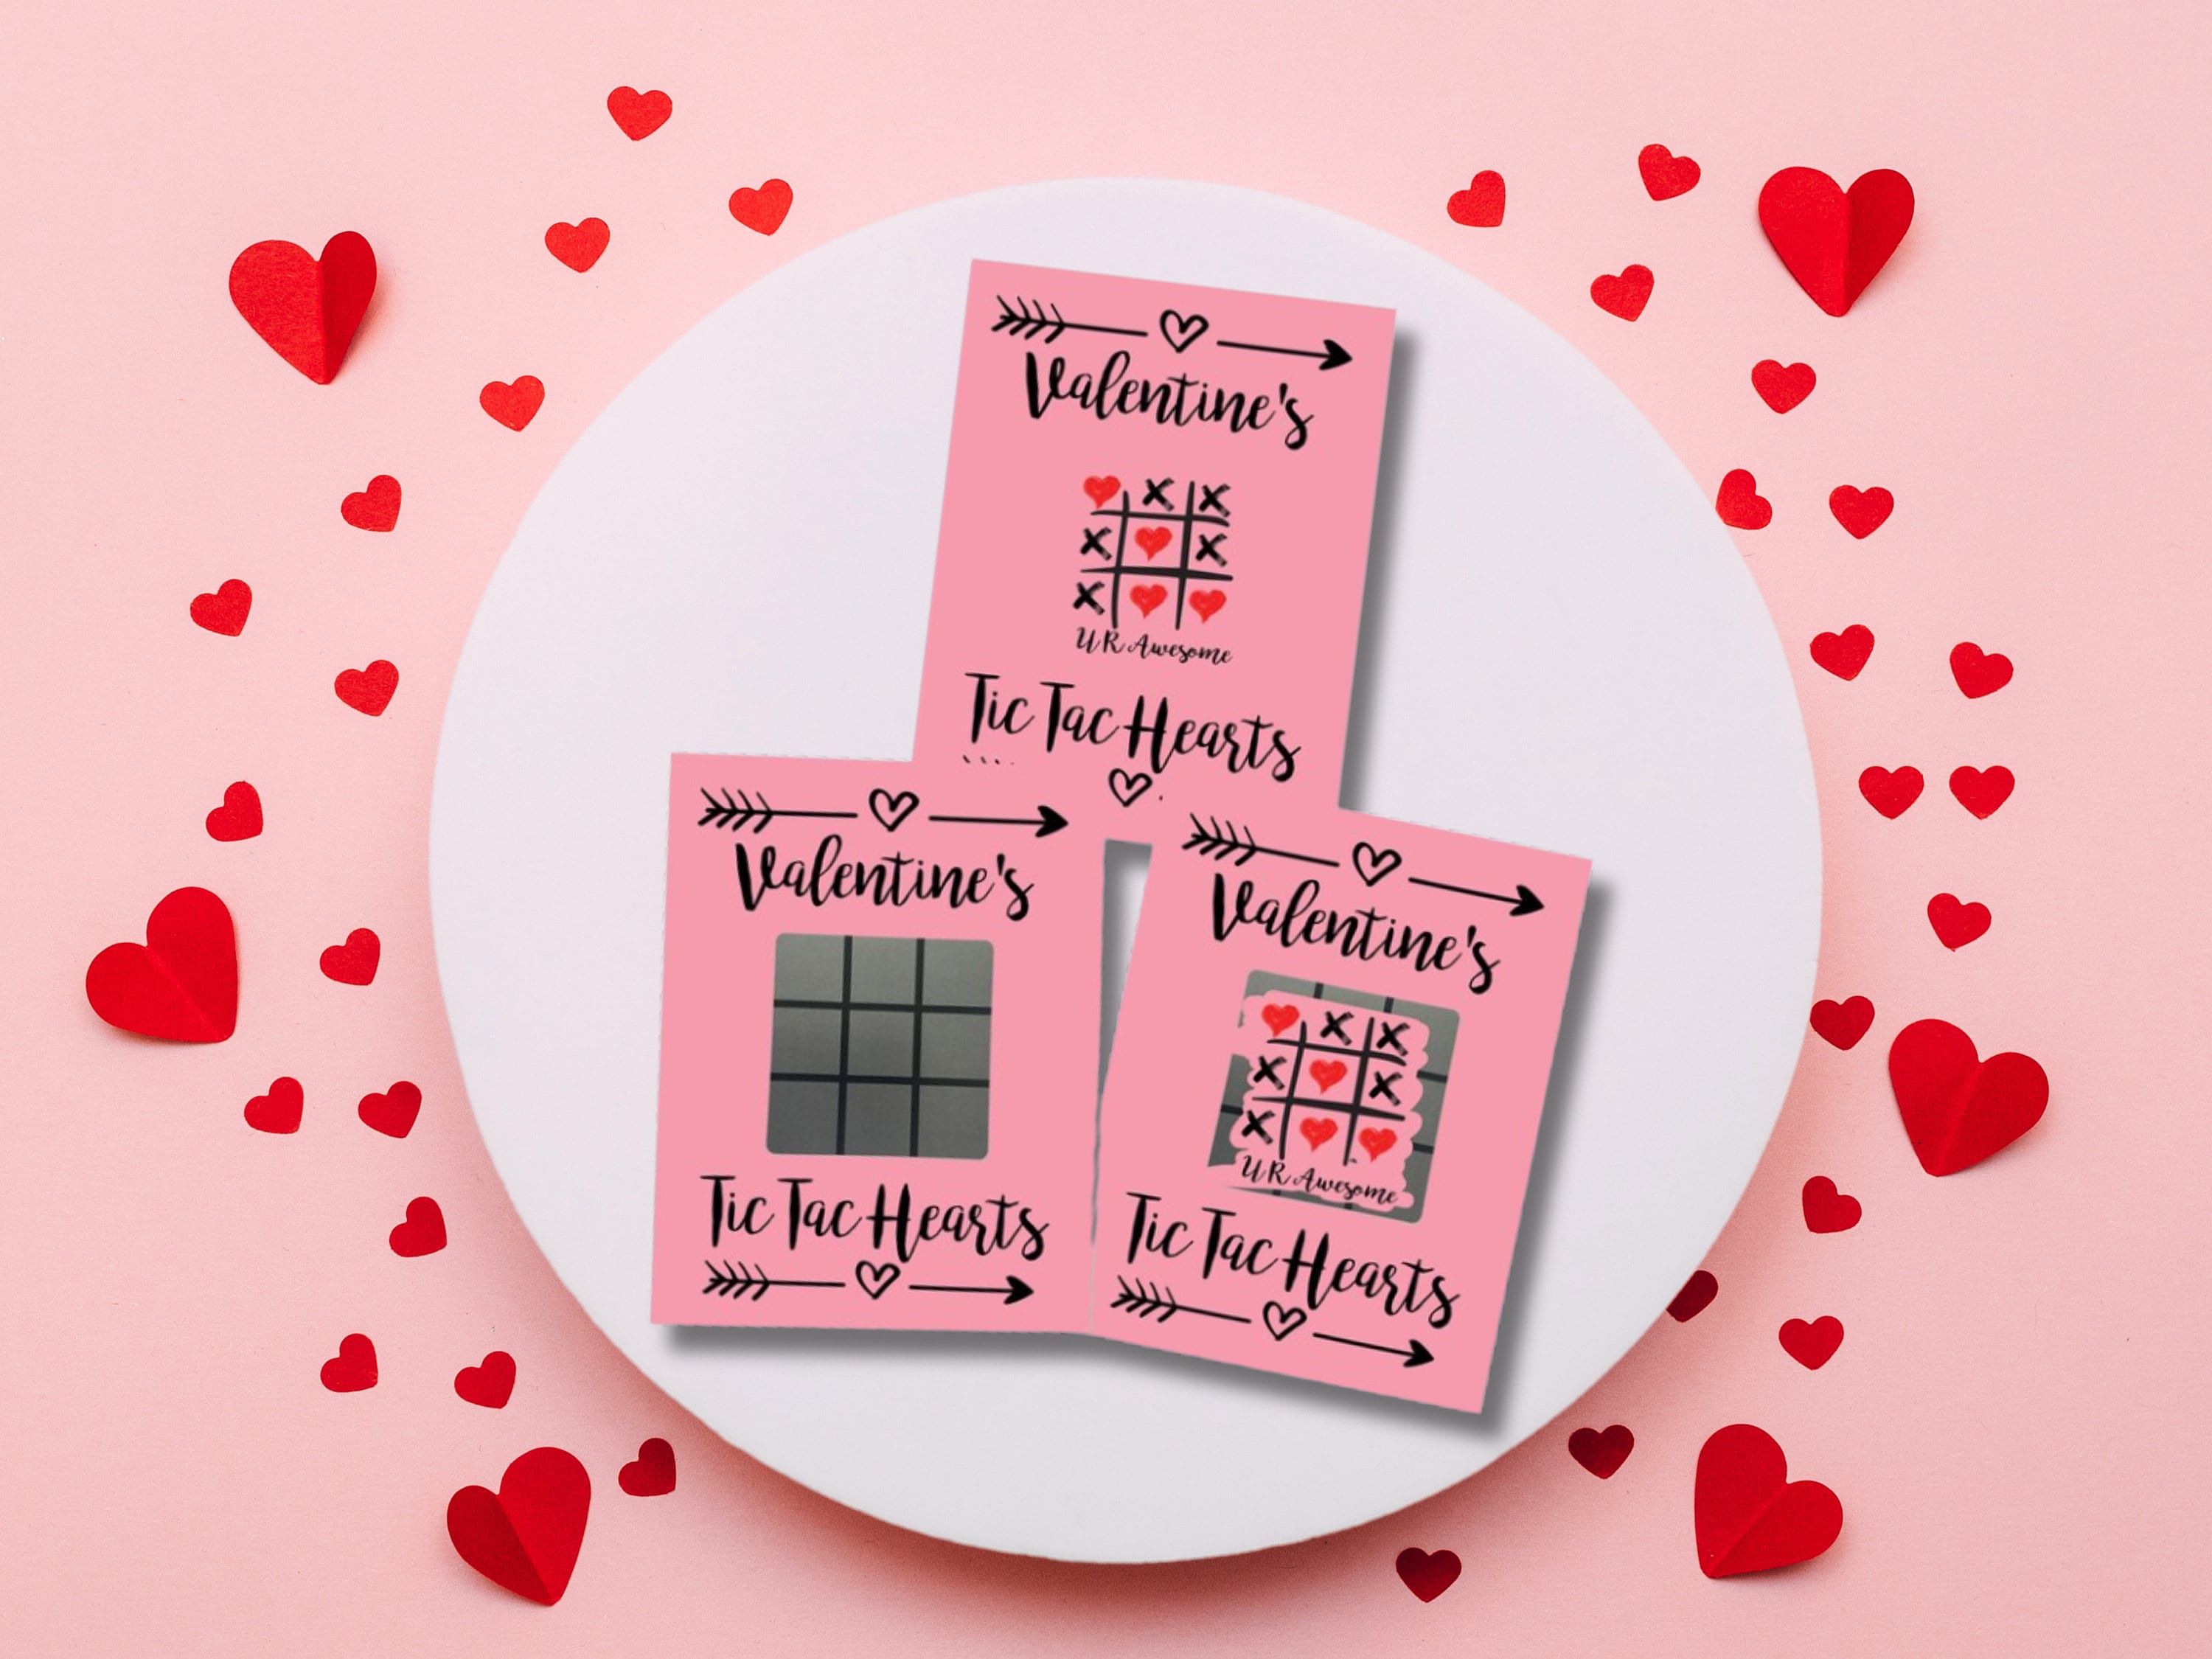 Valentine Idea #5 Altoid Tin Tic Tac Toe + Download - Made by A Princess